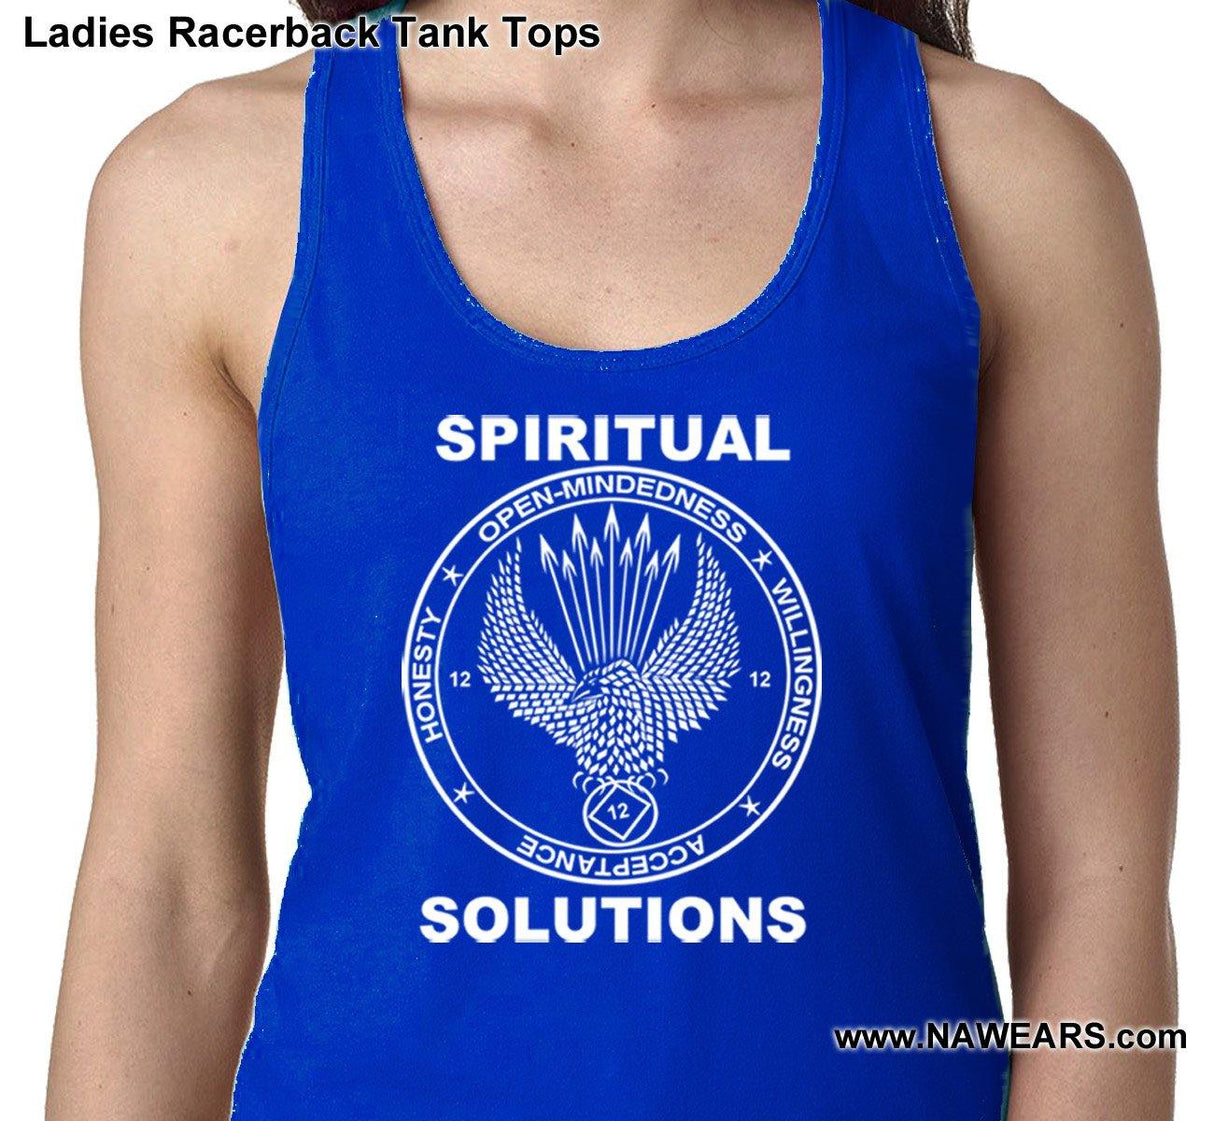 ltt- Spiritual Solutions - Ladies Tank Tops - nawears